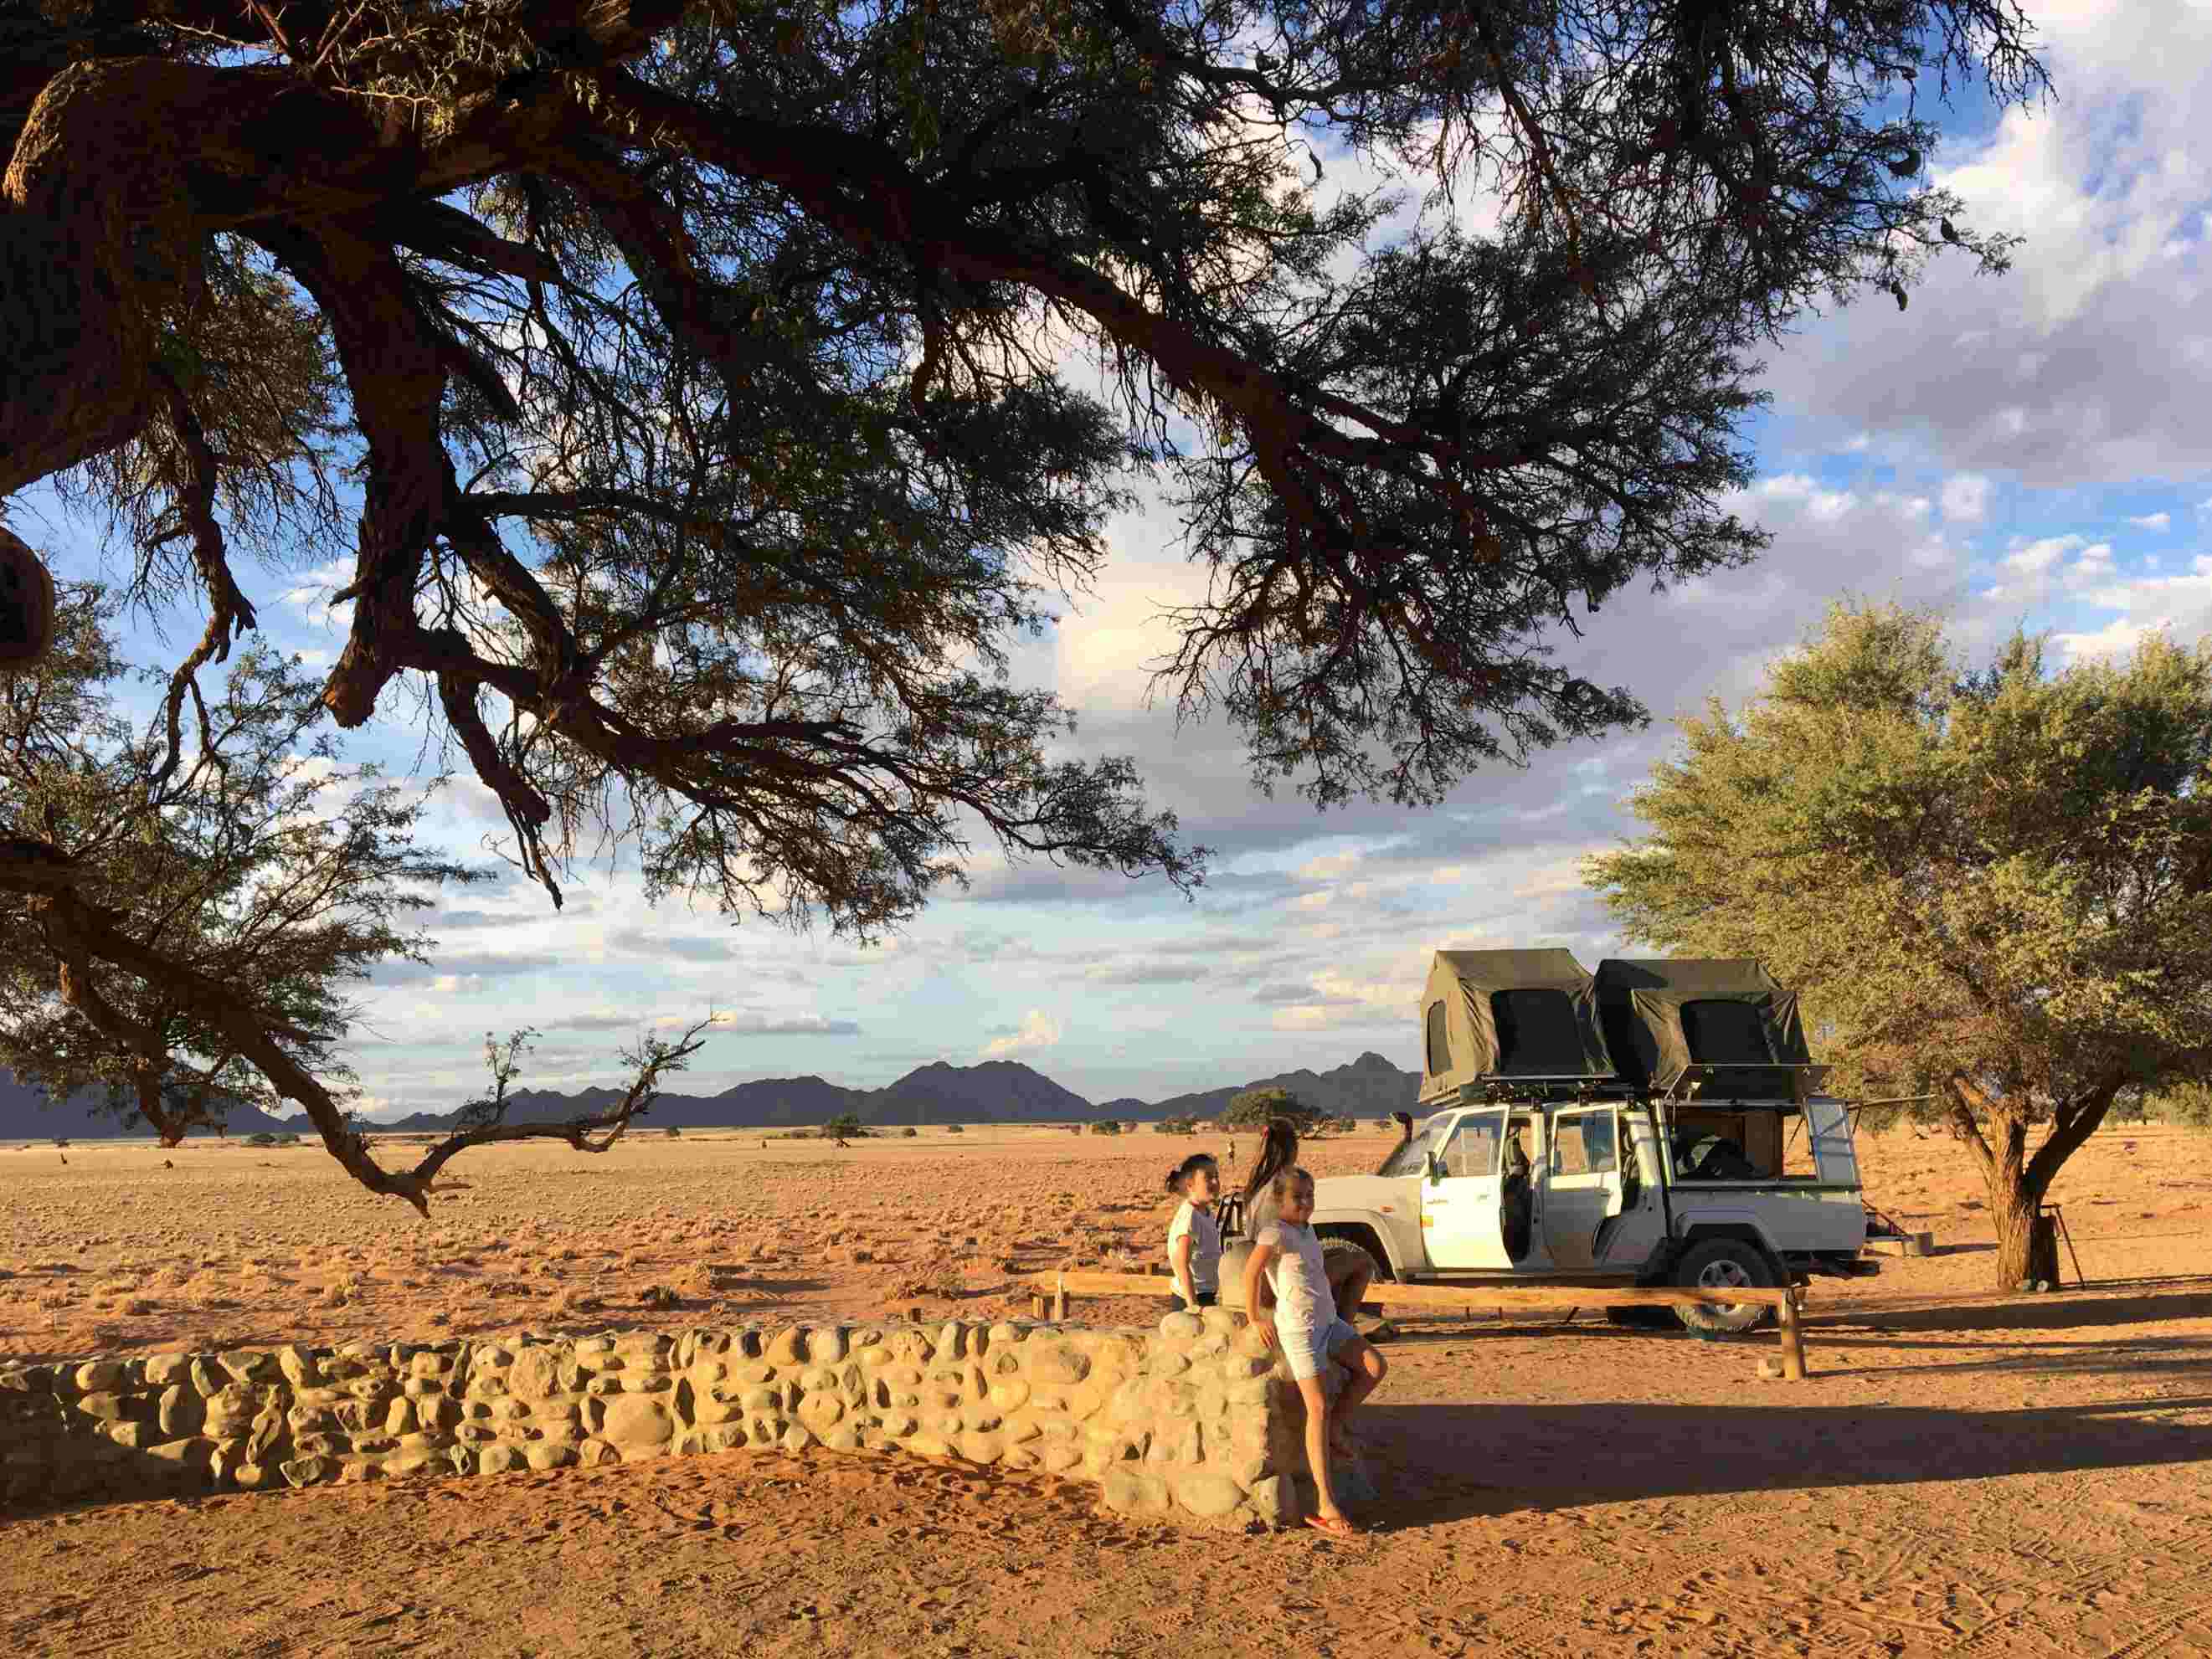 Namibie: Guide du camping